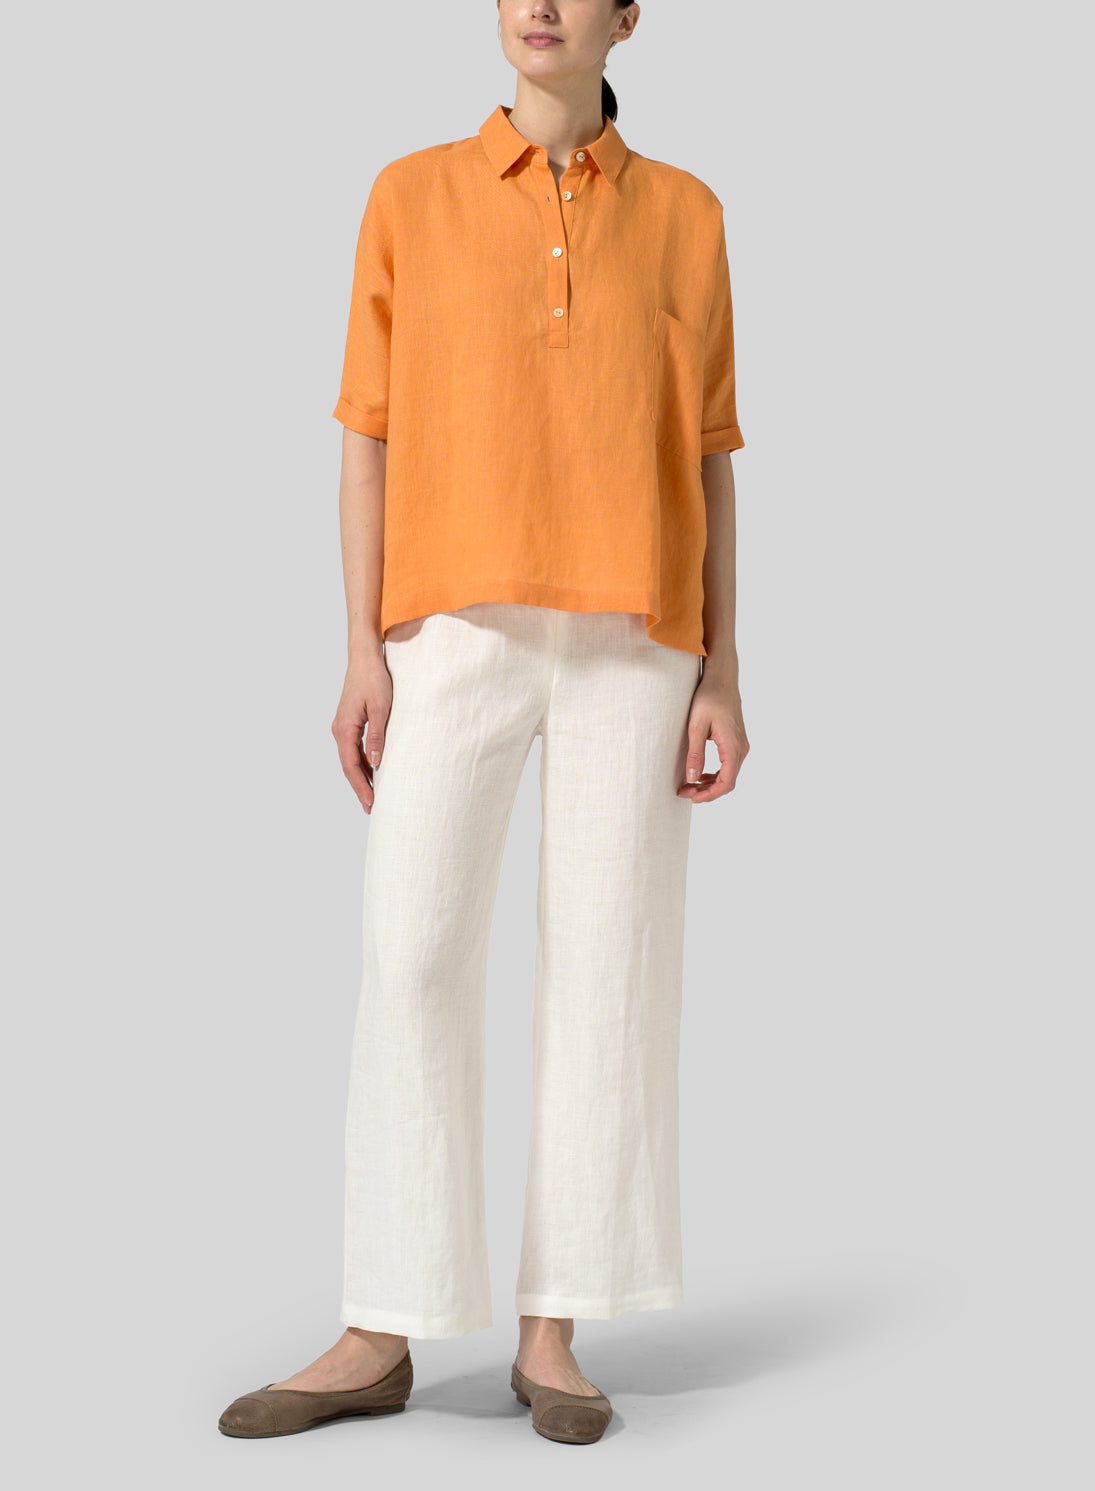 Cotton And Linen Classic Collar Short Sleeve Shirt - boddysize